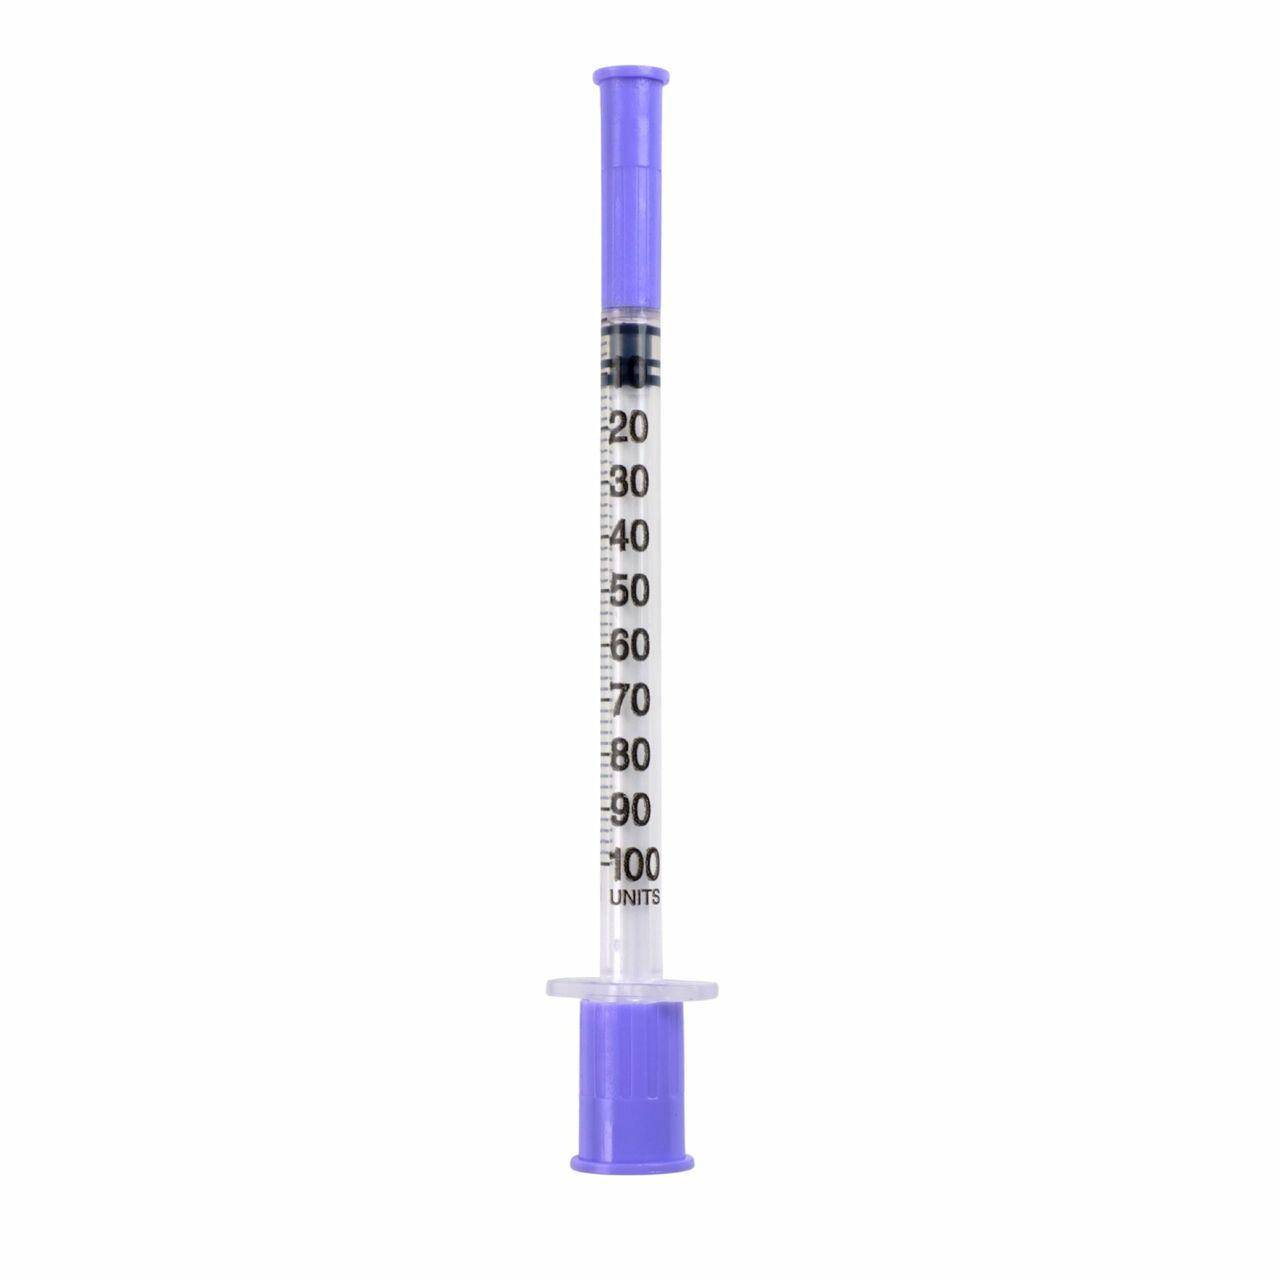 FMS Micro Syringe 32G 8mm 1ml - UKMEDI